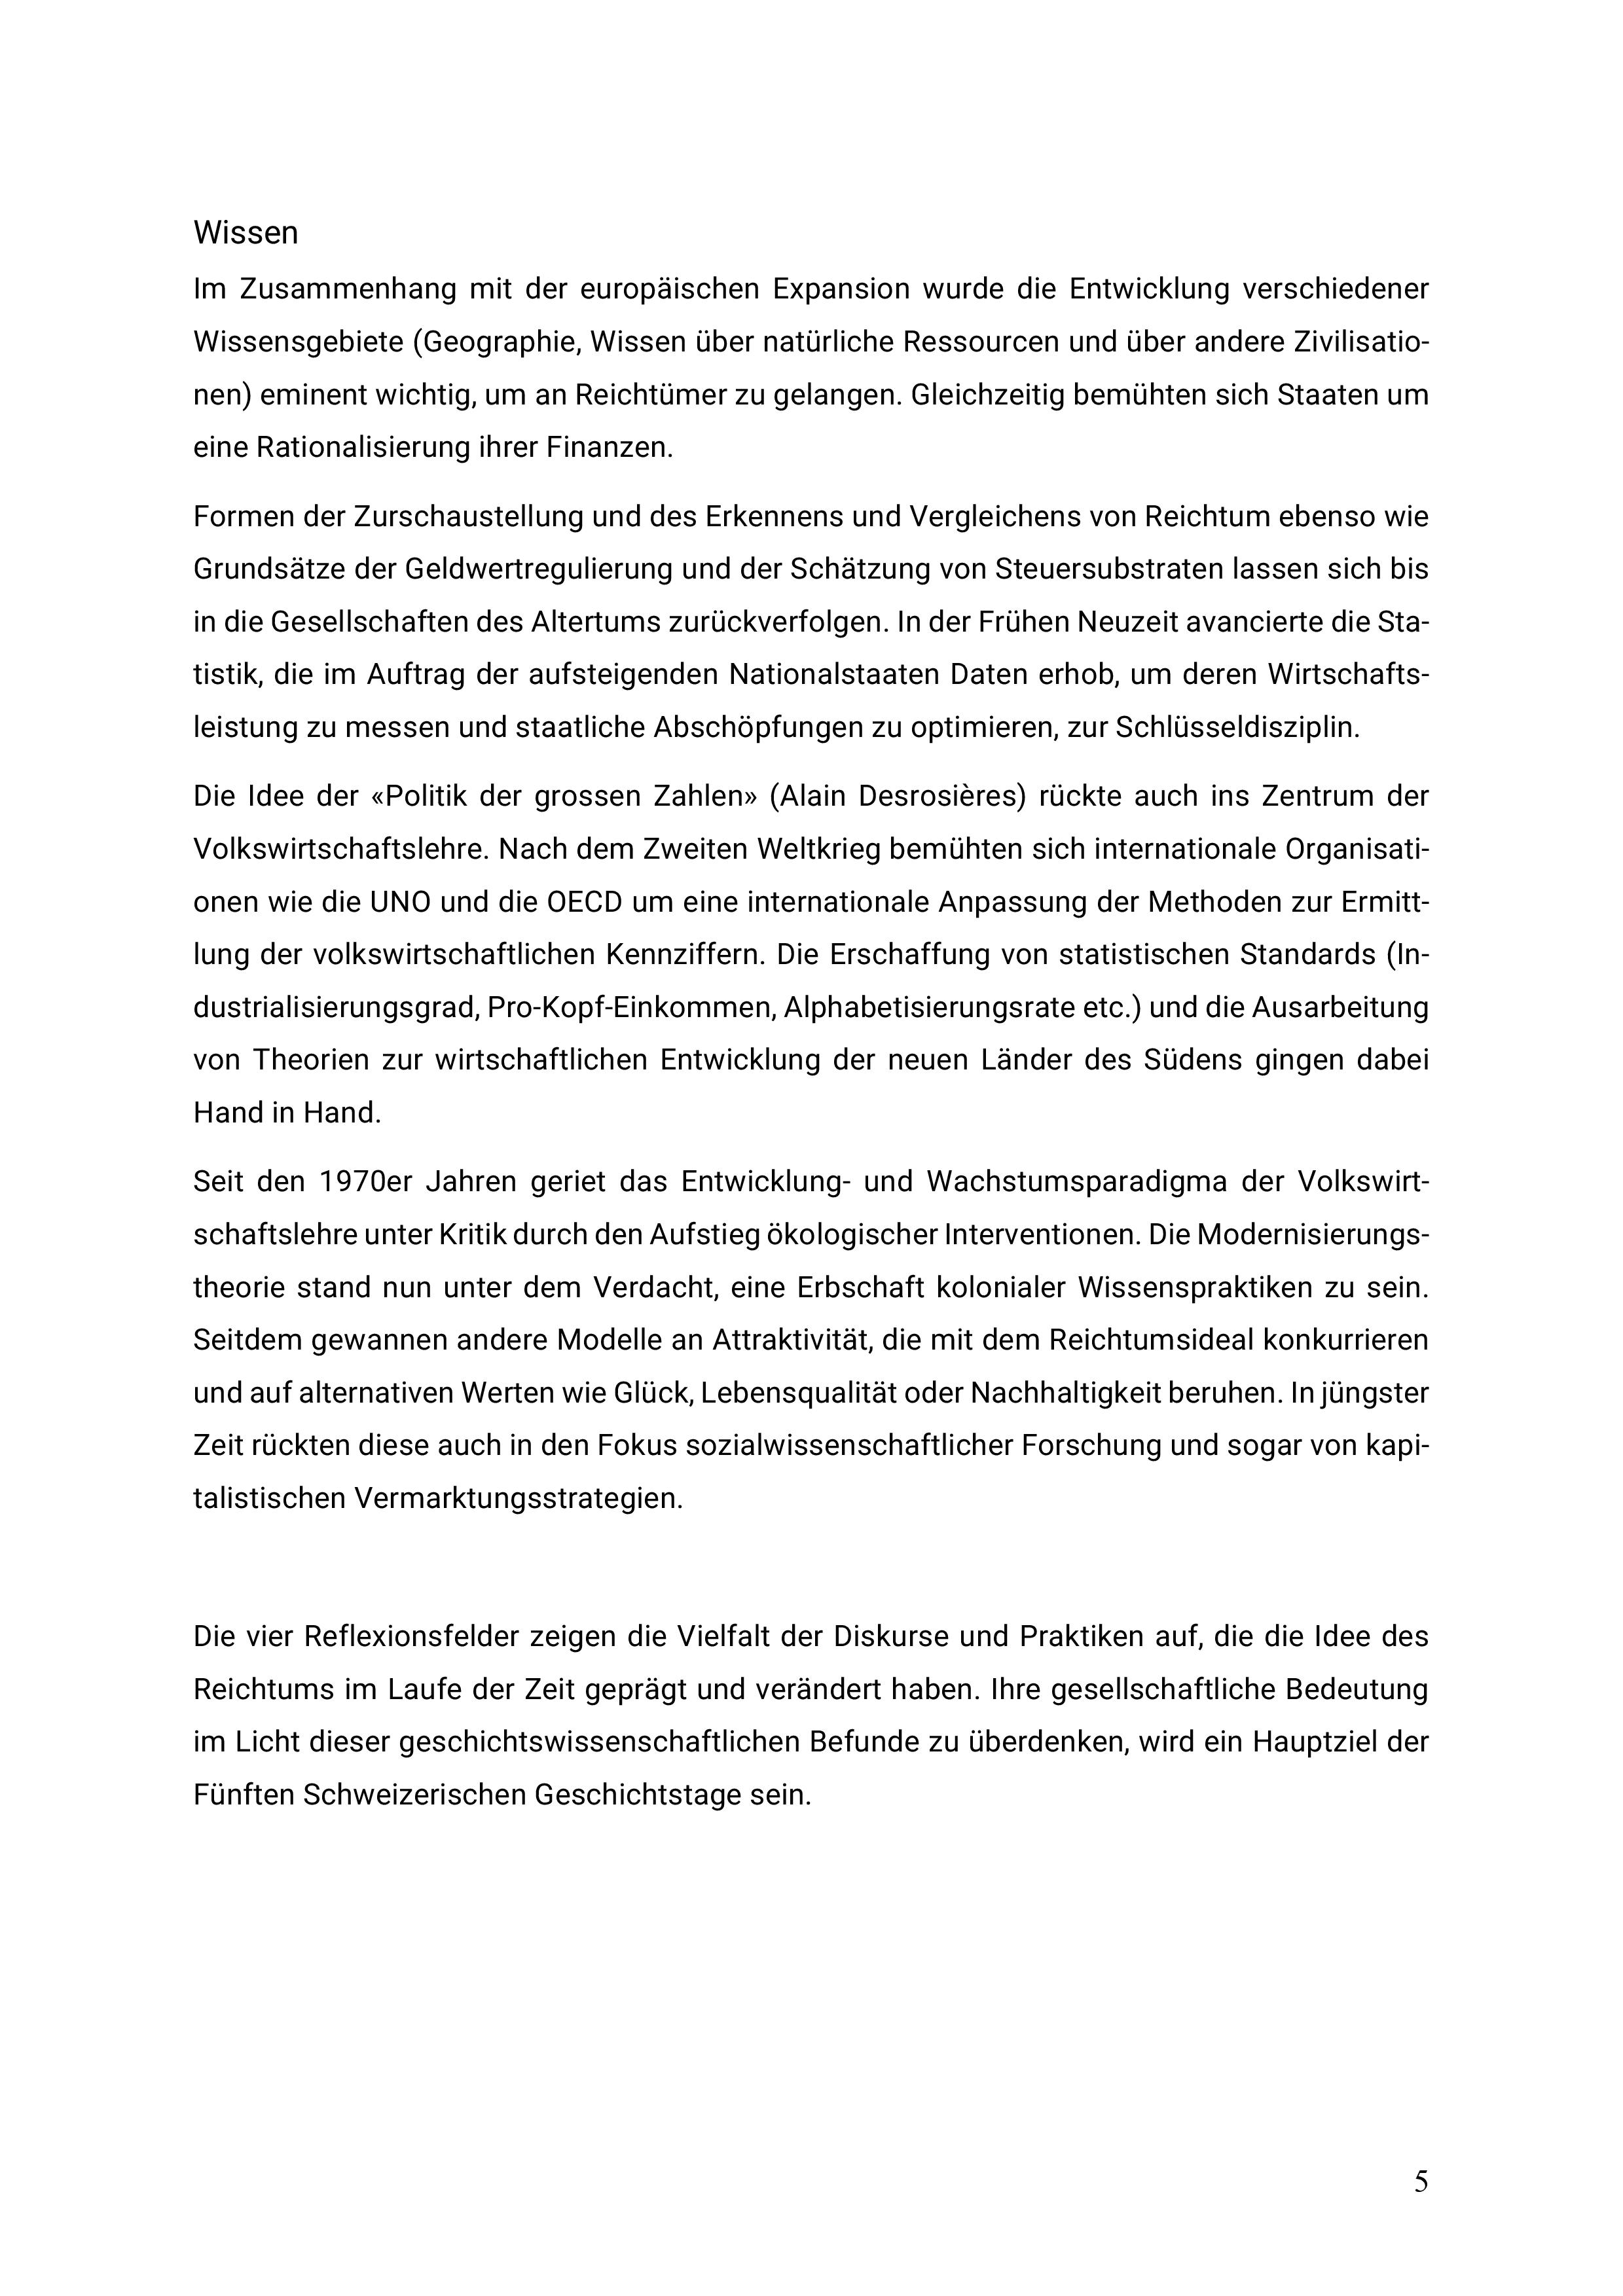 CfP_D Schweizer Geschichtstage 2019-page-005